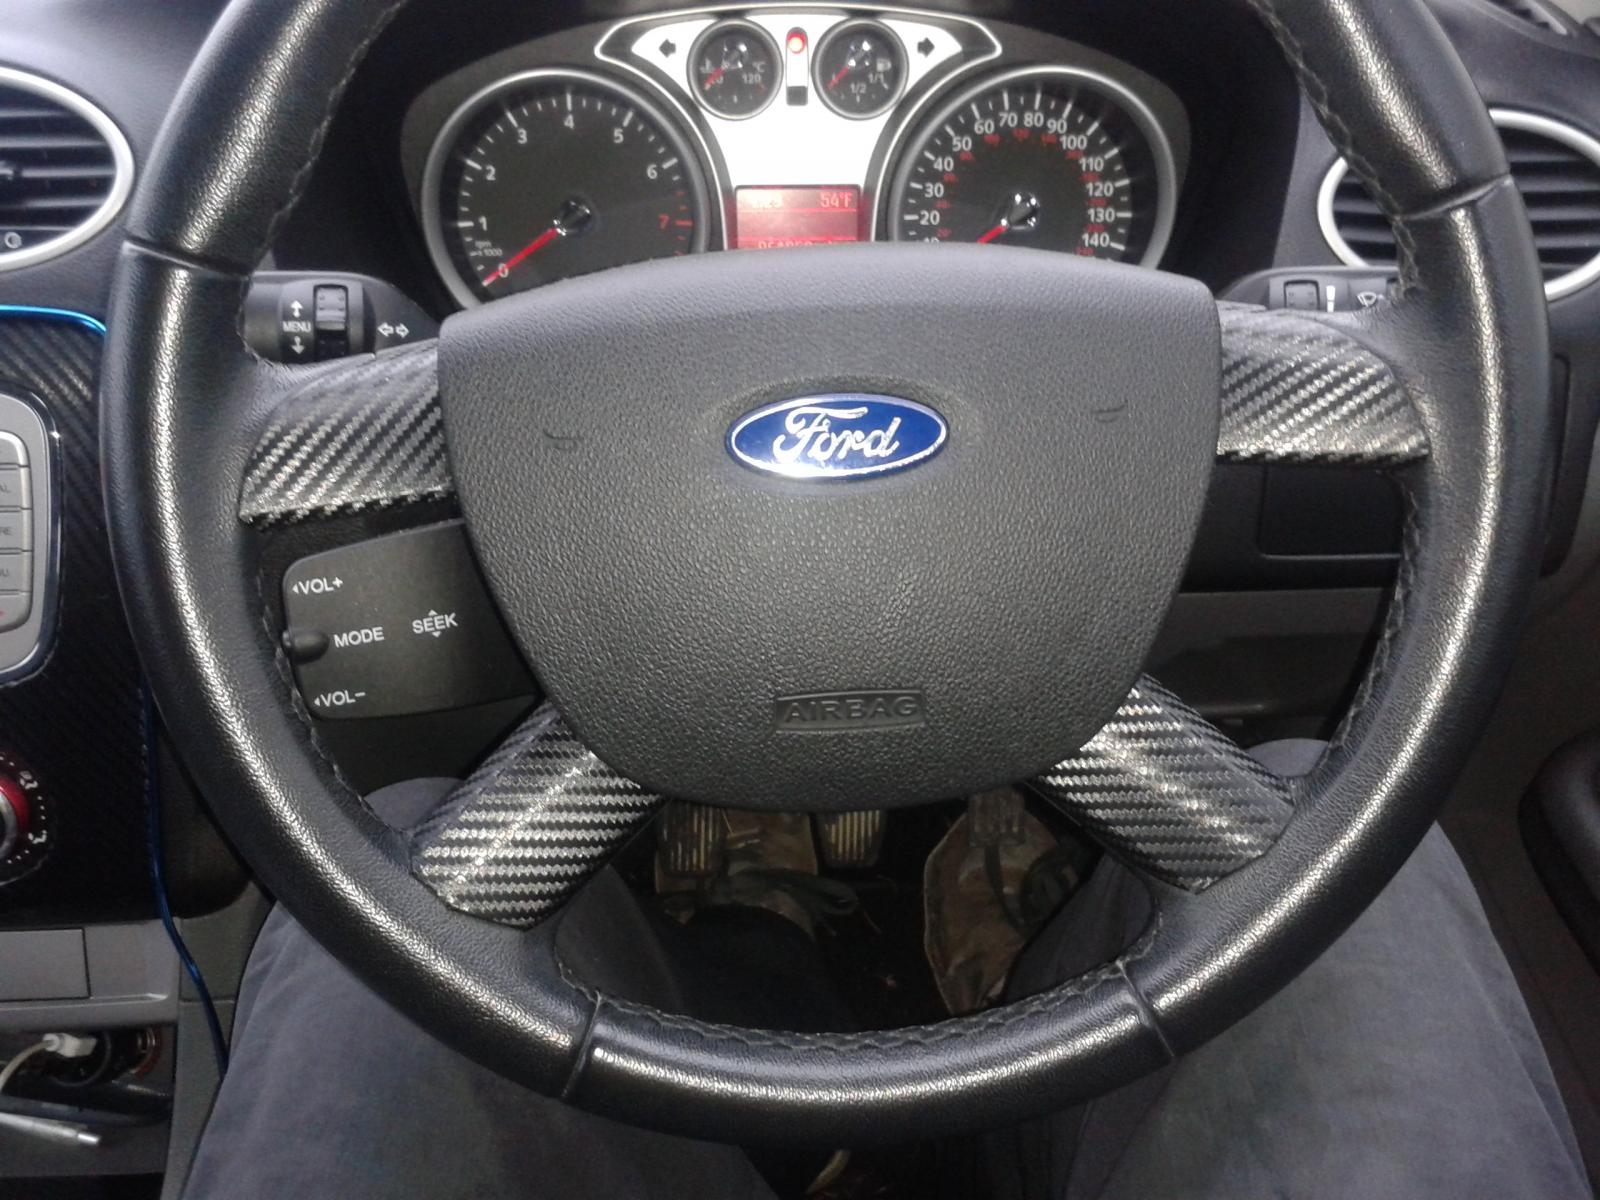 New steering wheel wrap